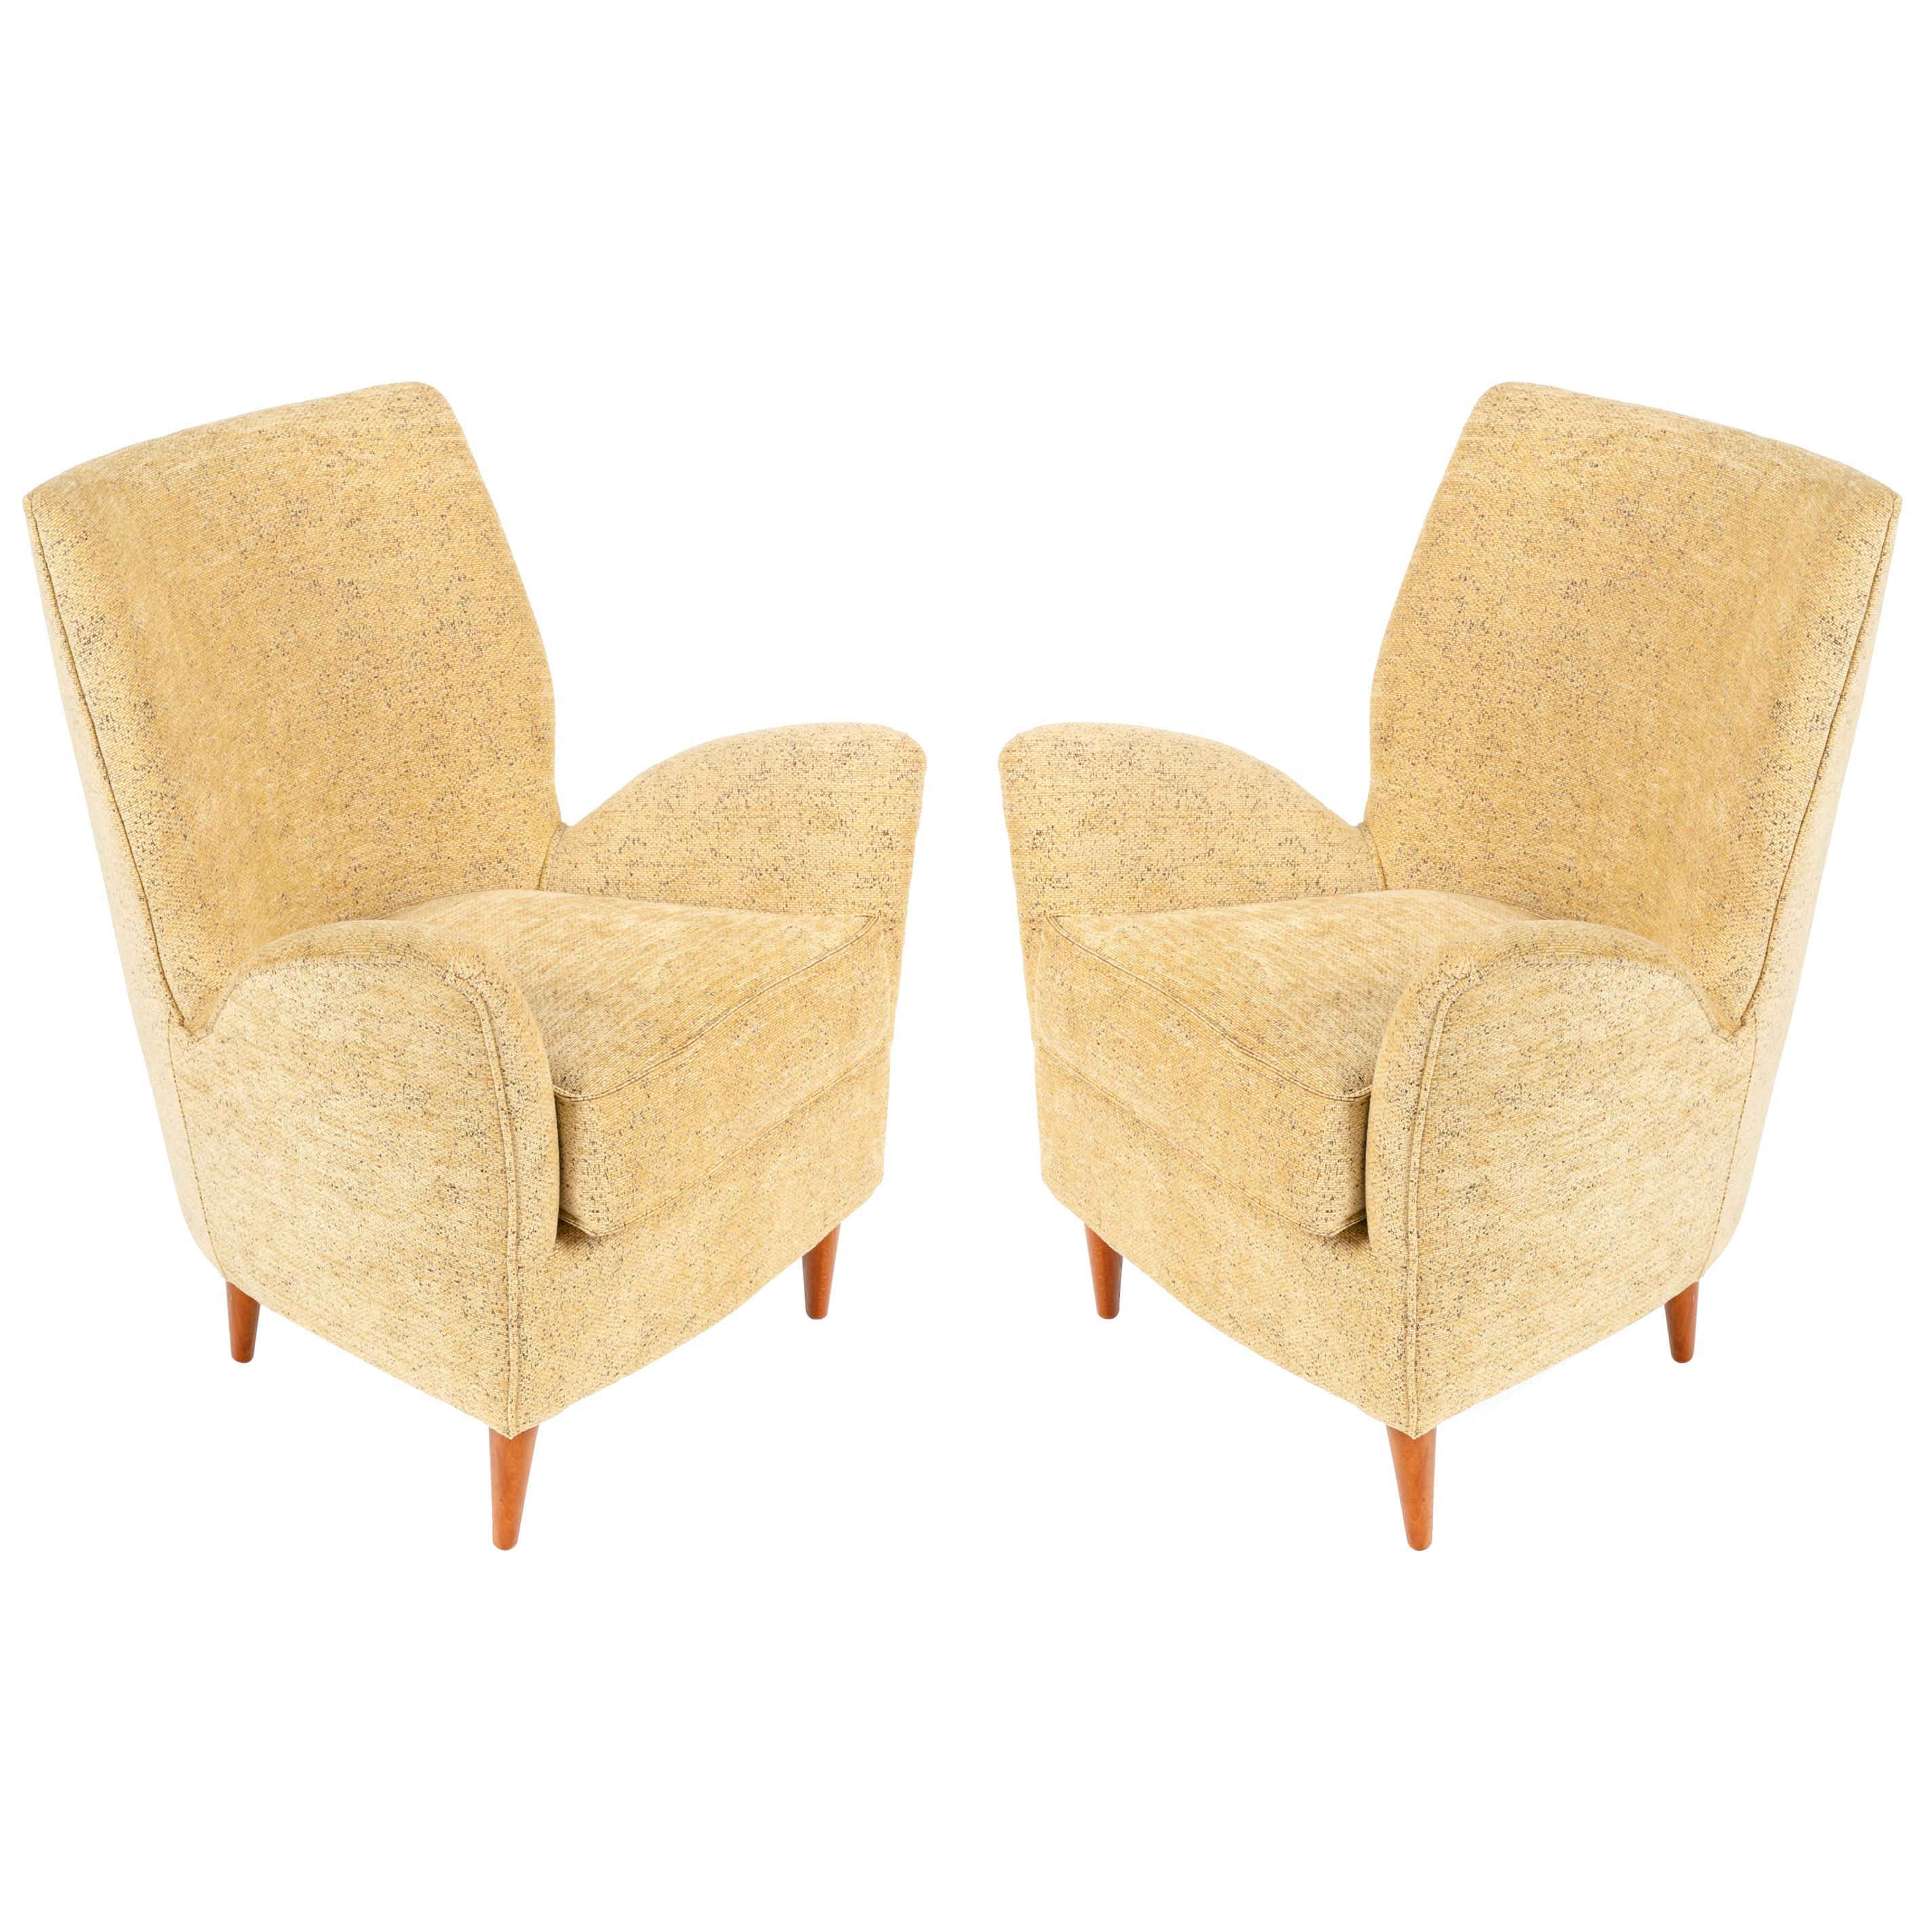 Pair of Yellow Italian Midcentury Style Lounge Chairs